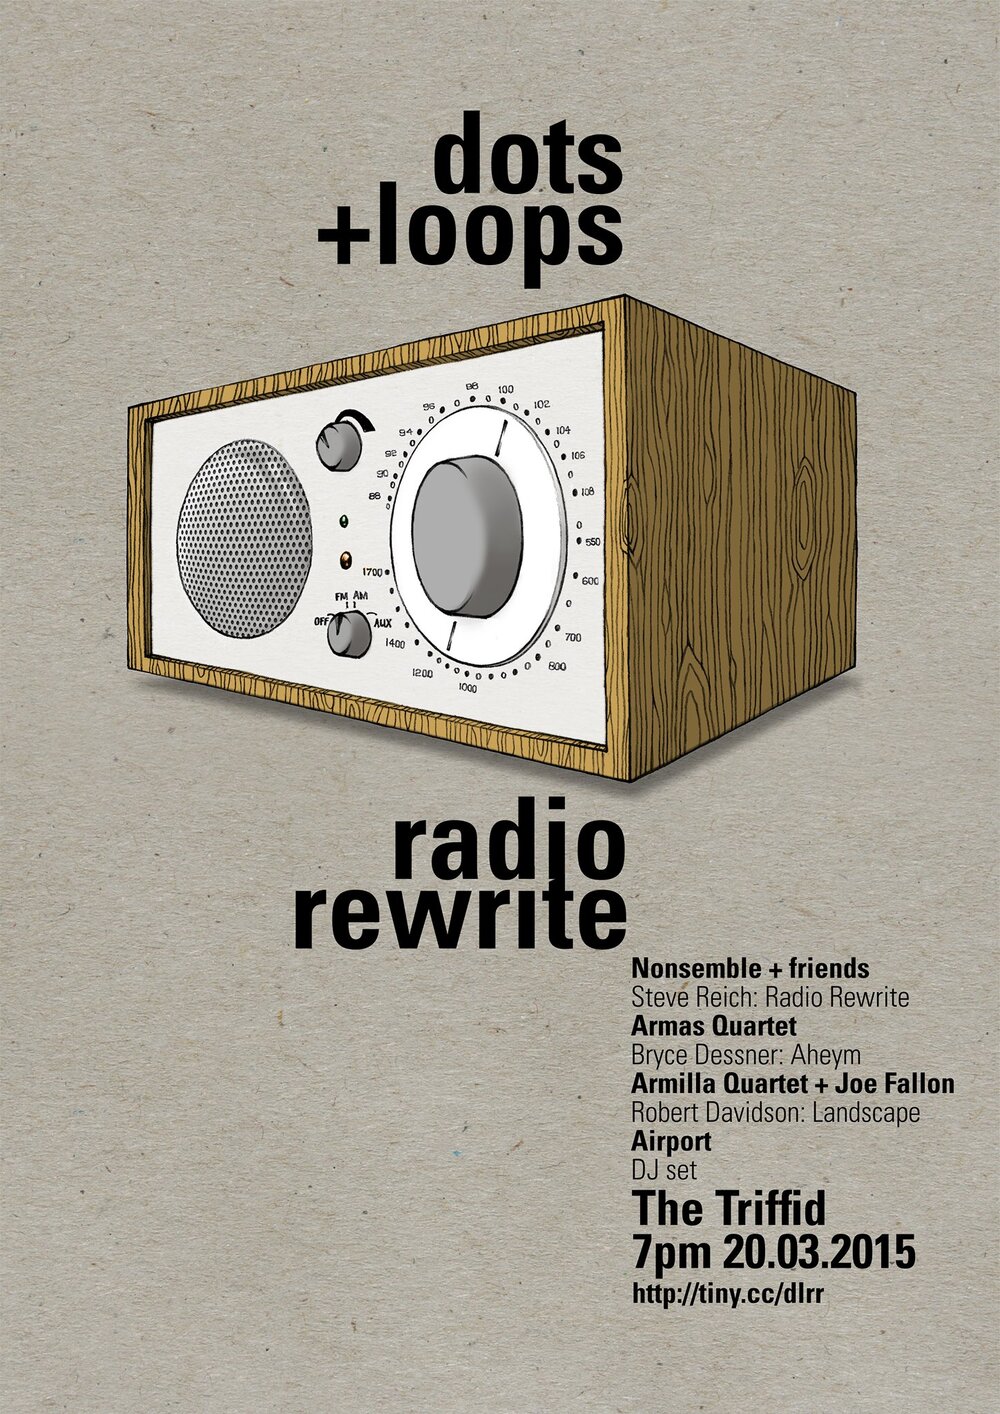 RADIO REWRITE — dots+loops